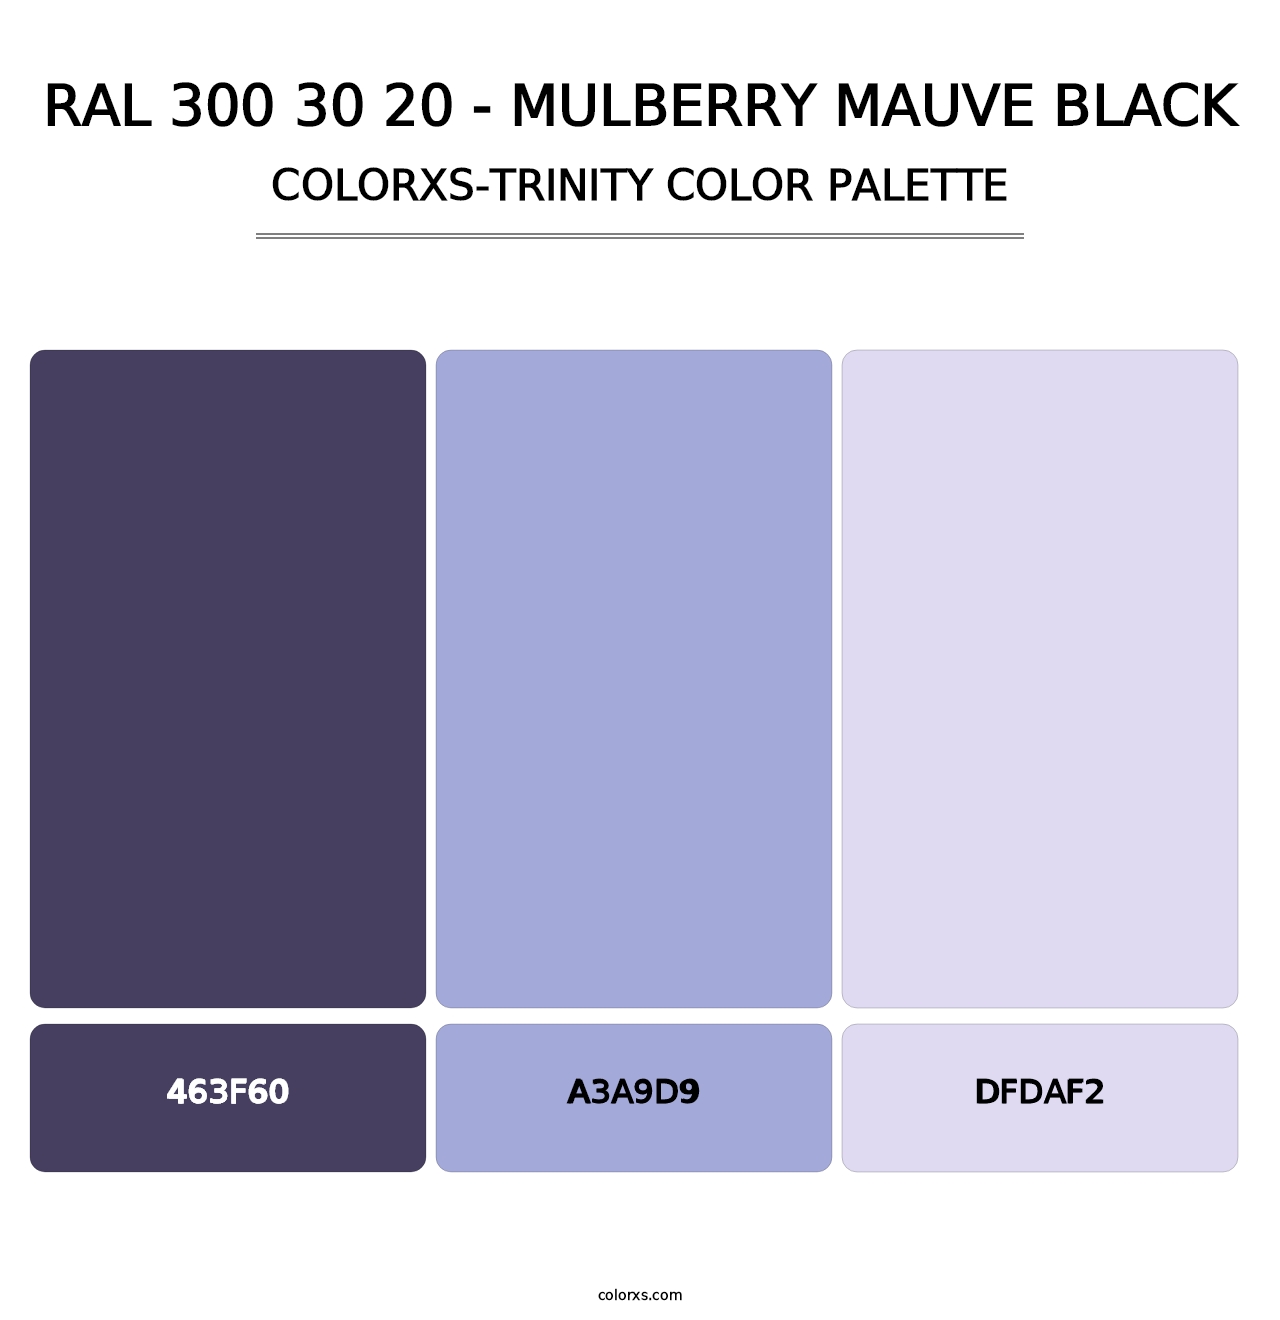 RAL 300 30 20 - Mulberry Mauve Black - Colorxs Trinity Palette